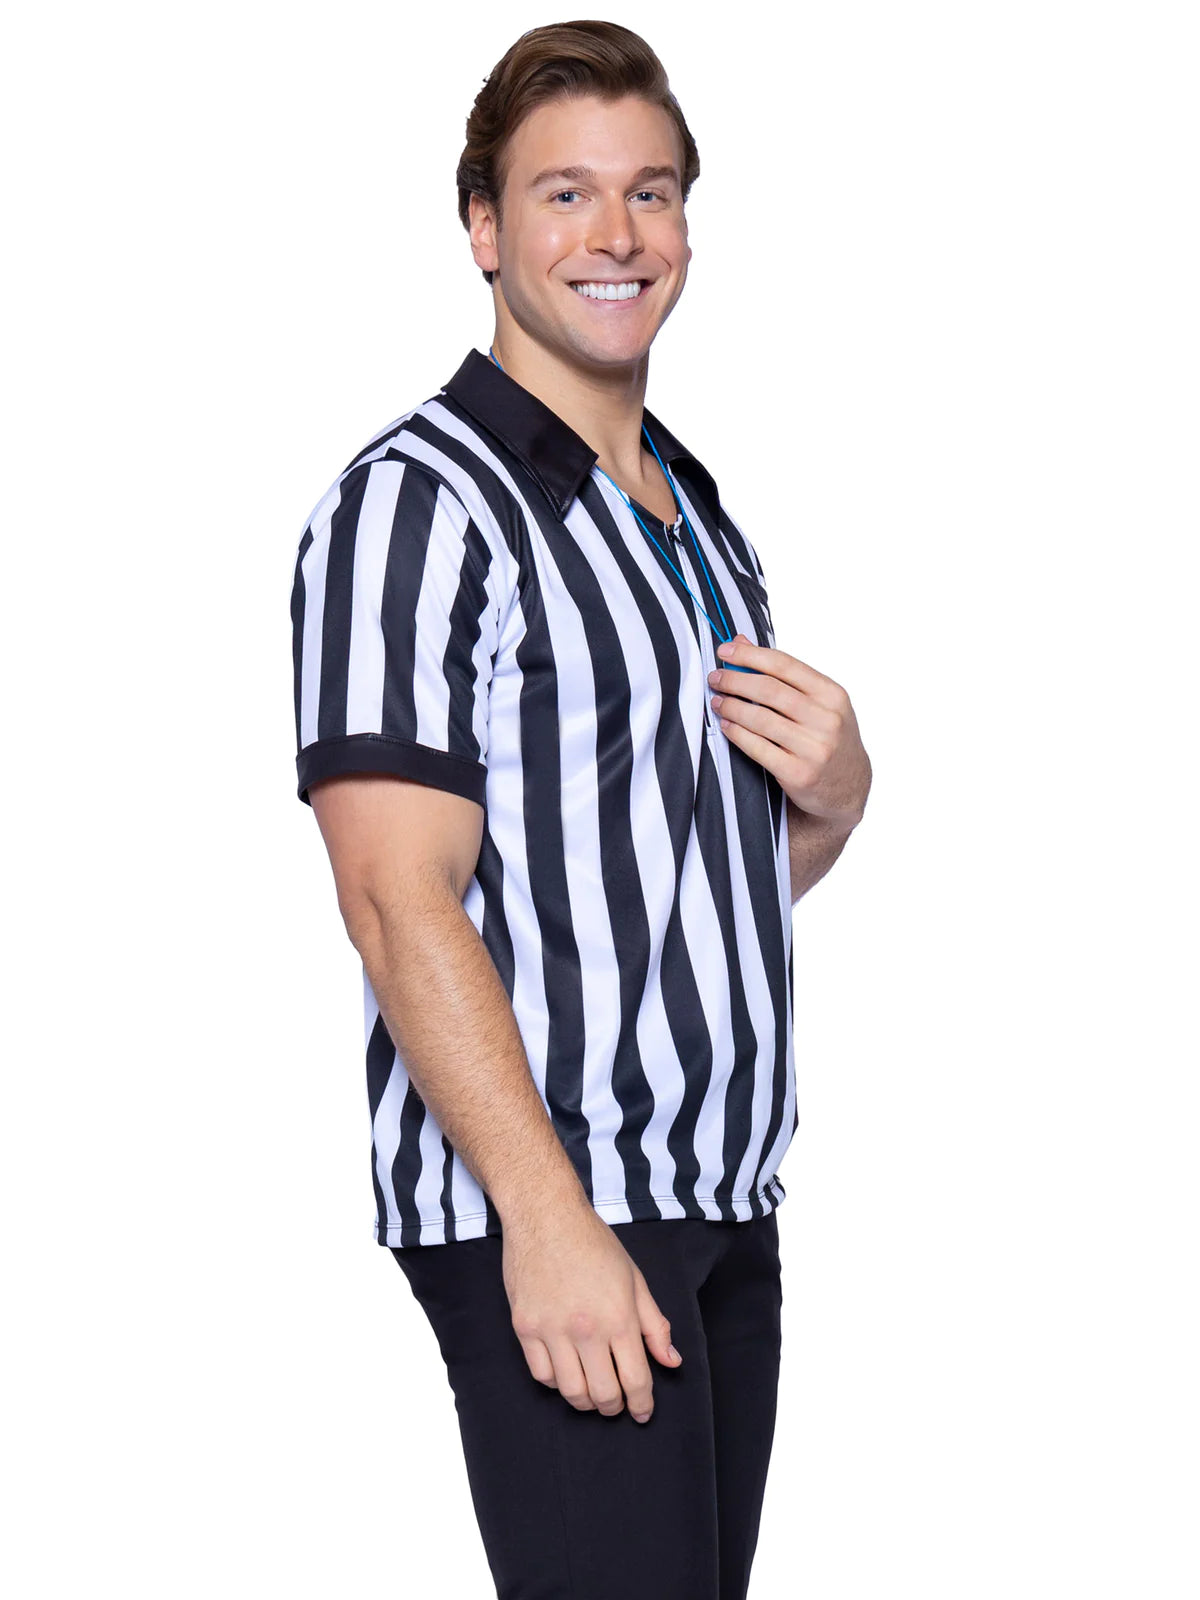 Men's Referee Shirt & Whistle Set